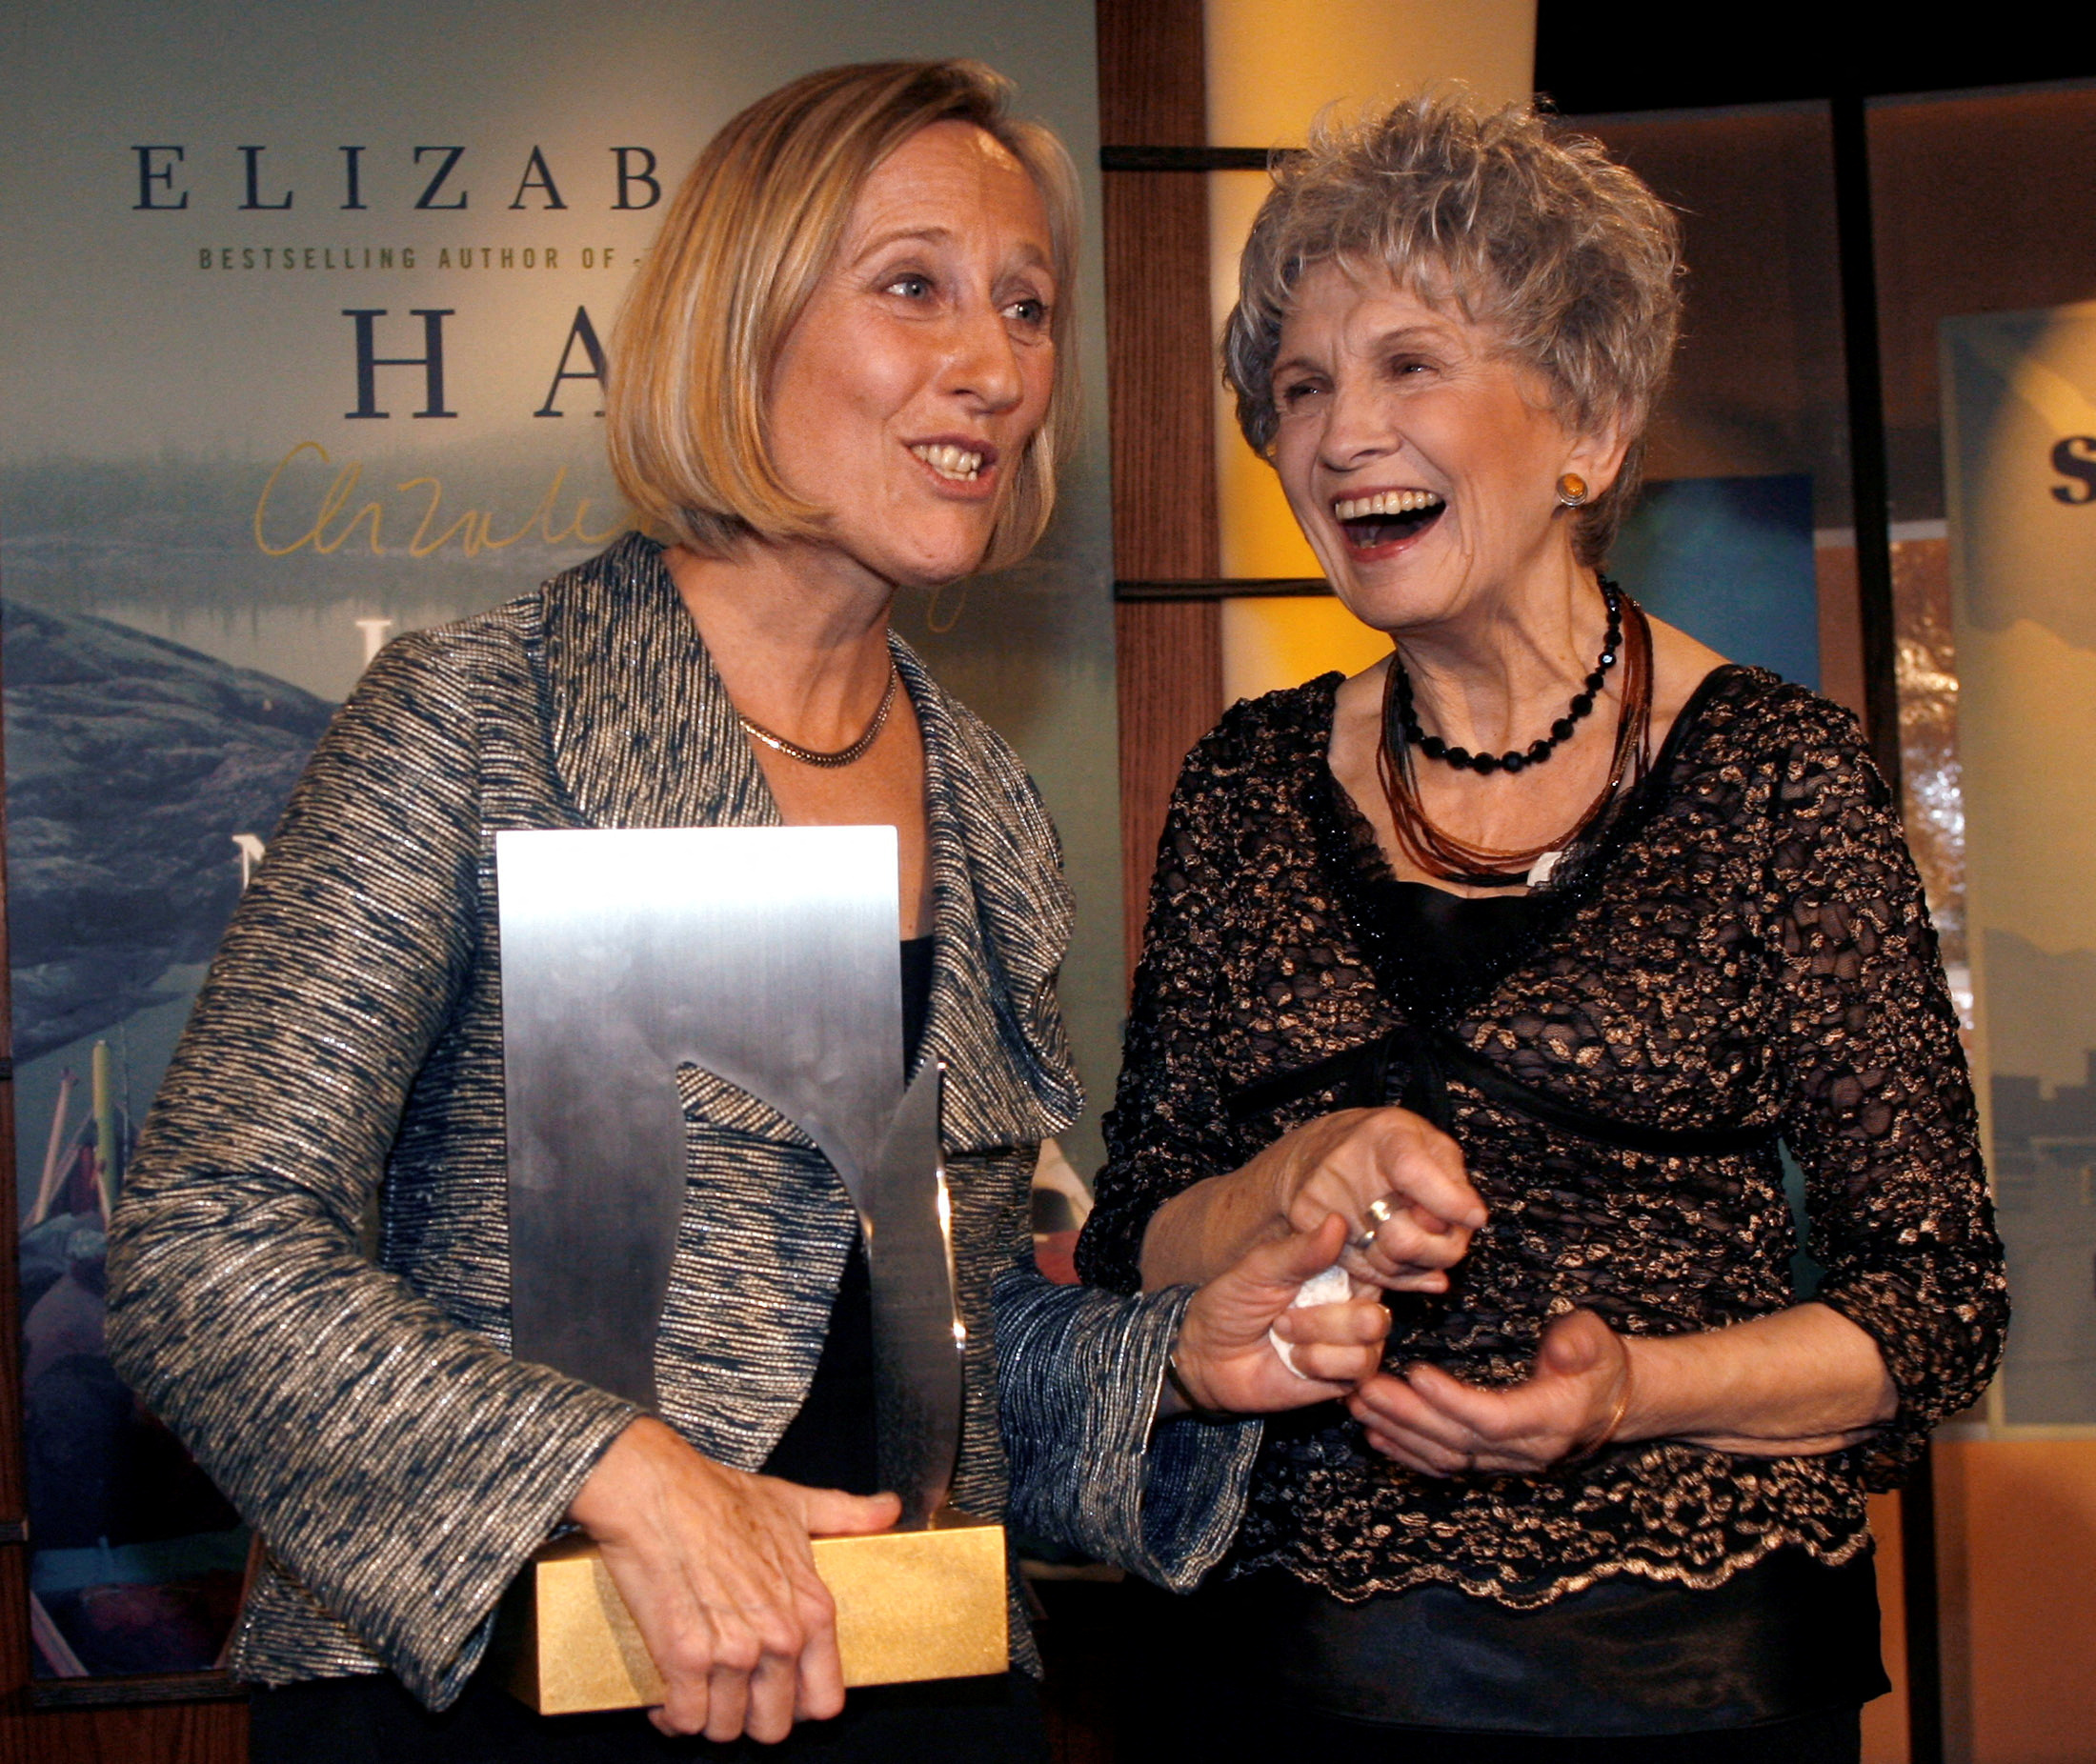 Author Hay celebrates winning Giller Prize with writer Munroe in Toronto